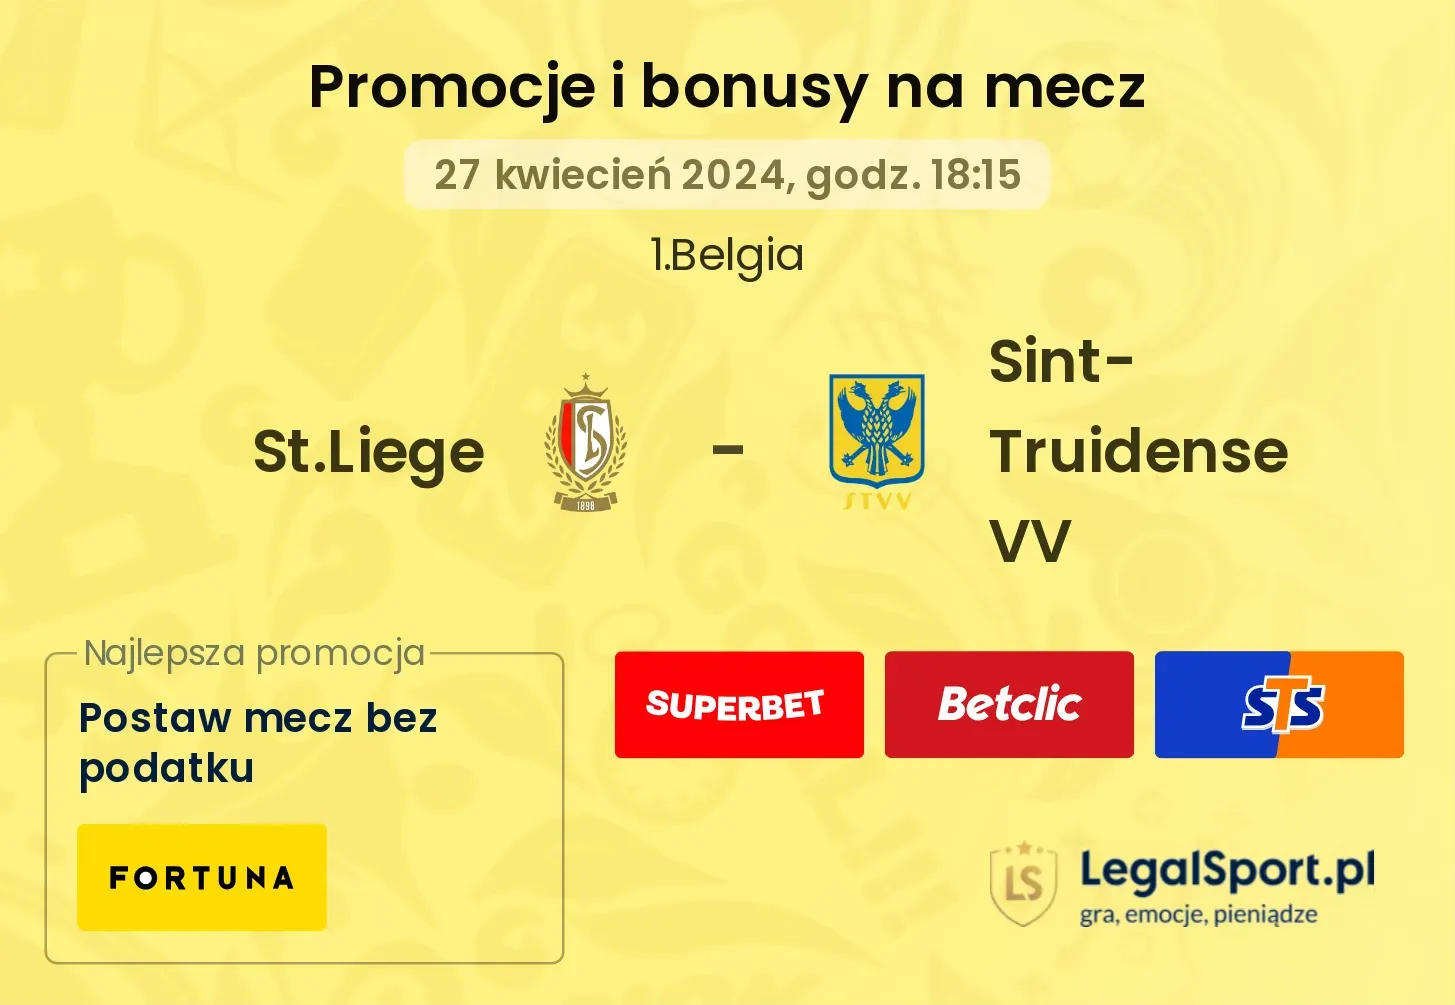 St.Liege - Sint-Truidense VV promocje bonusy na mecz